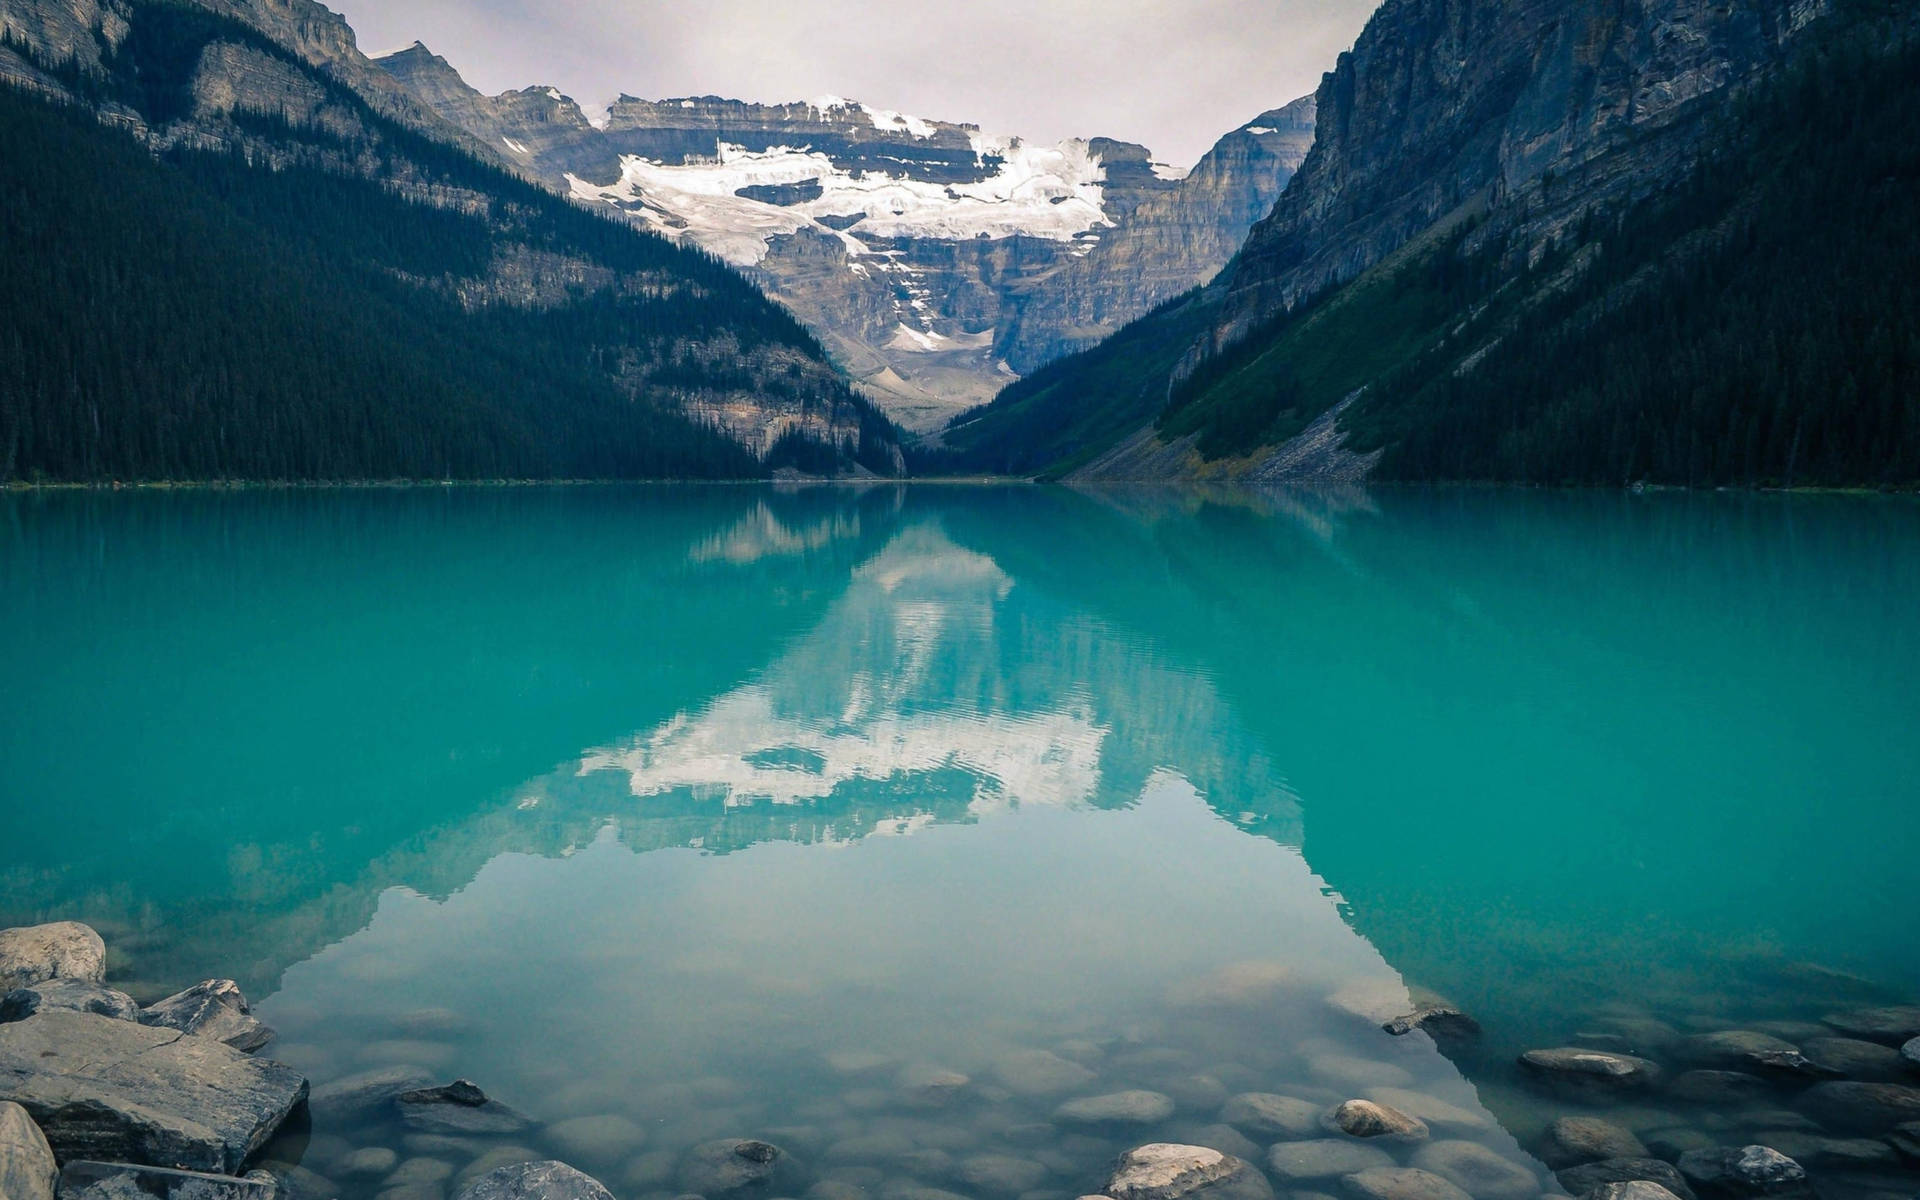 Macbook Pro Lake Louise Canada Wallpaper